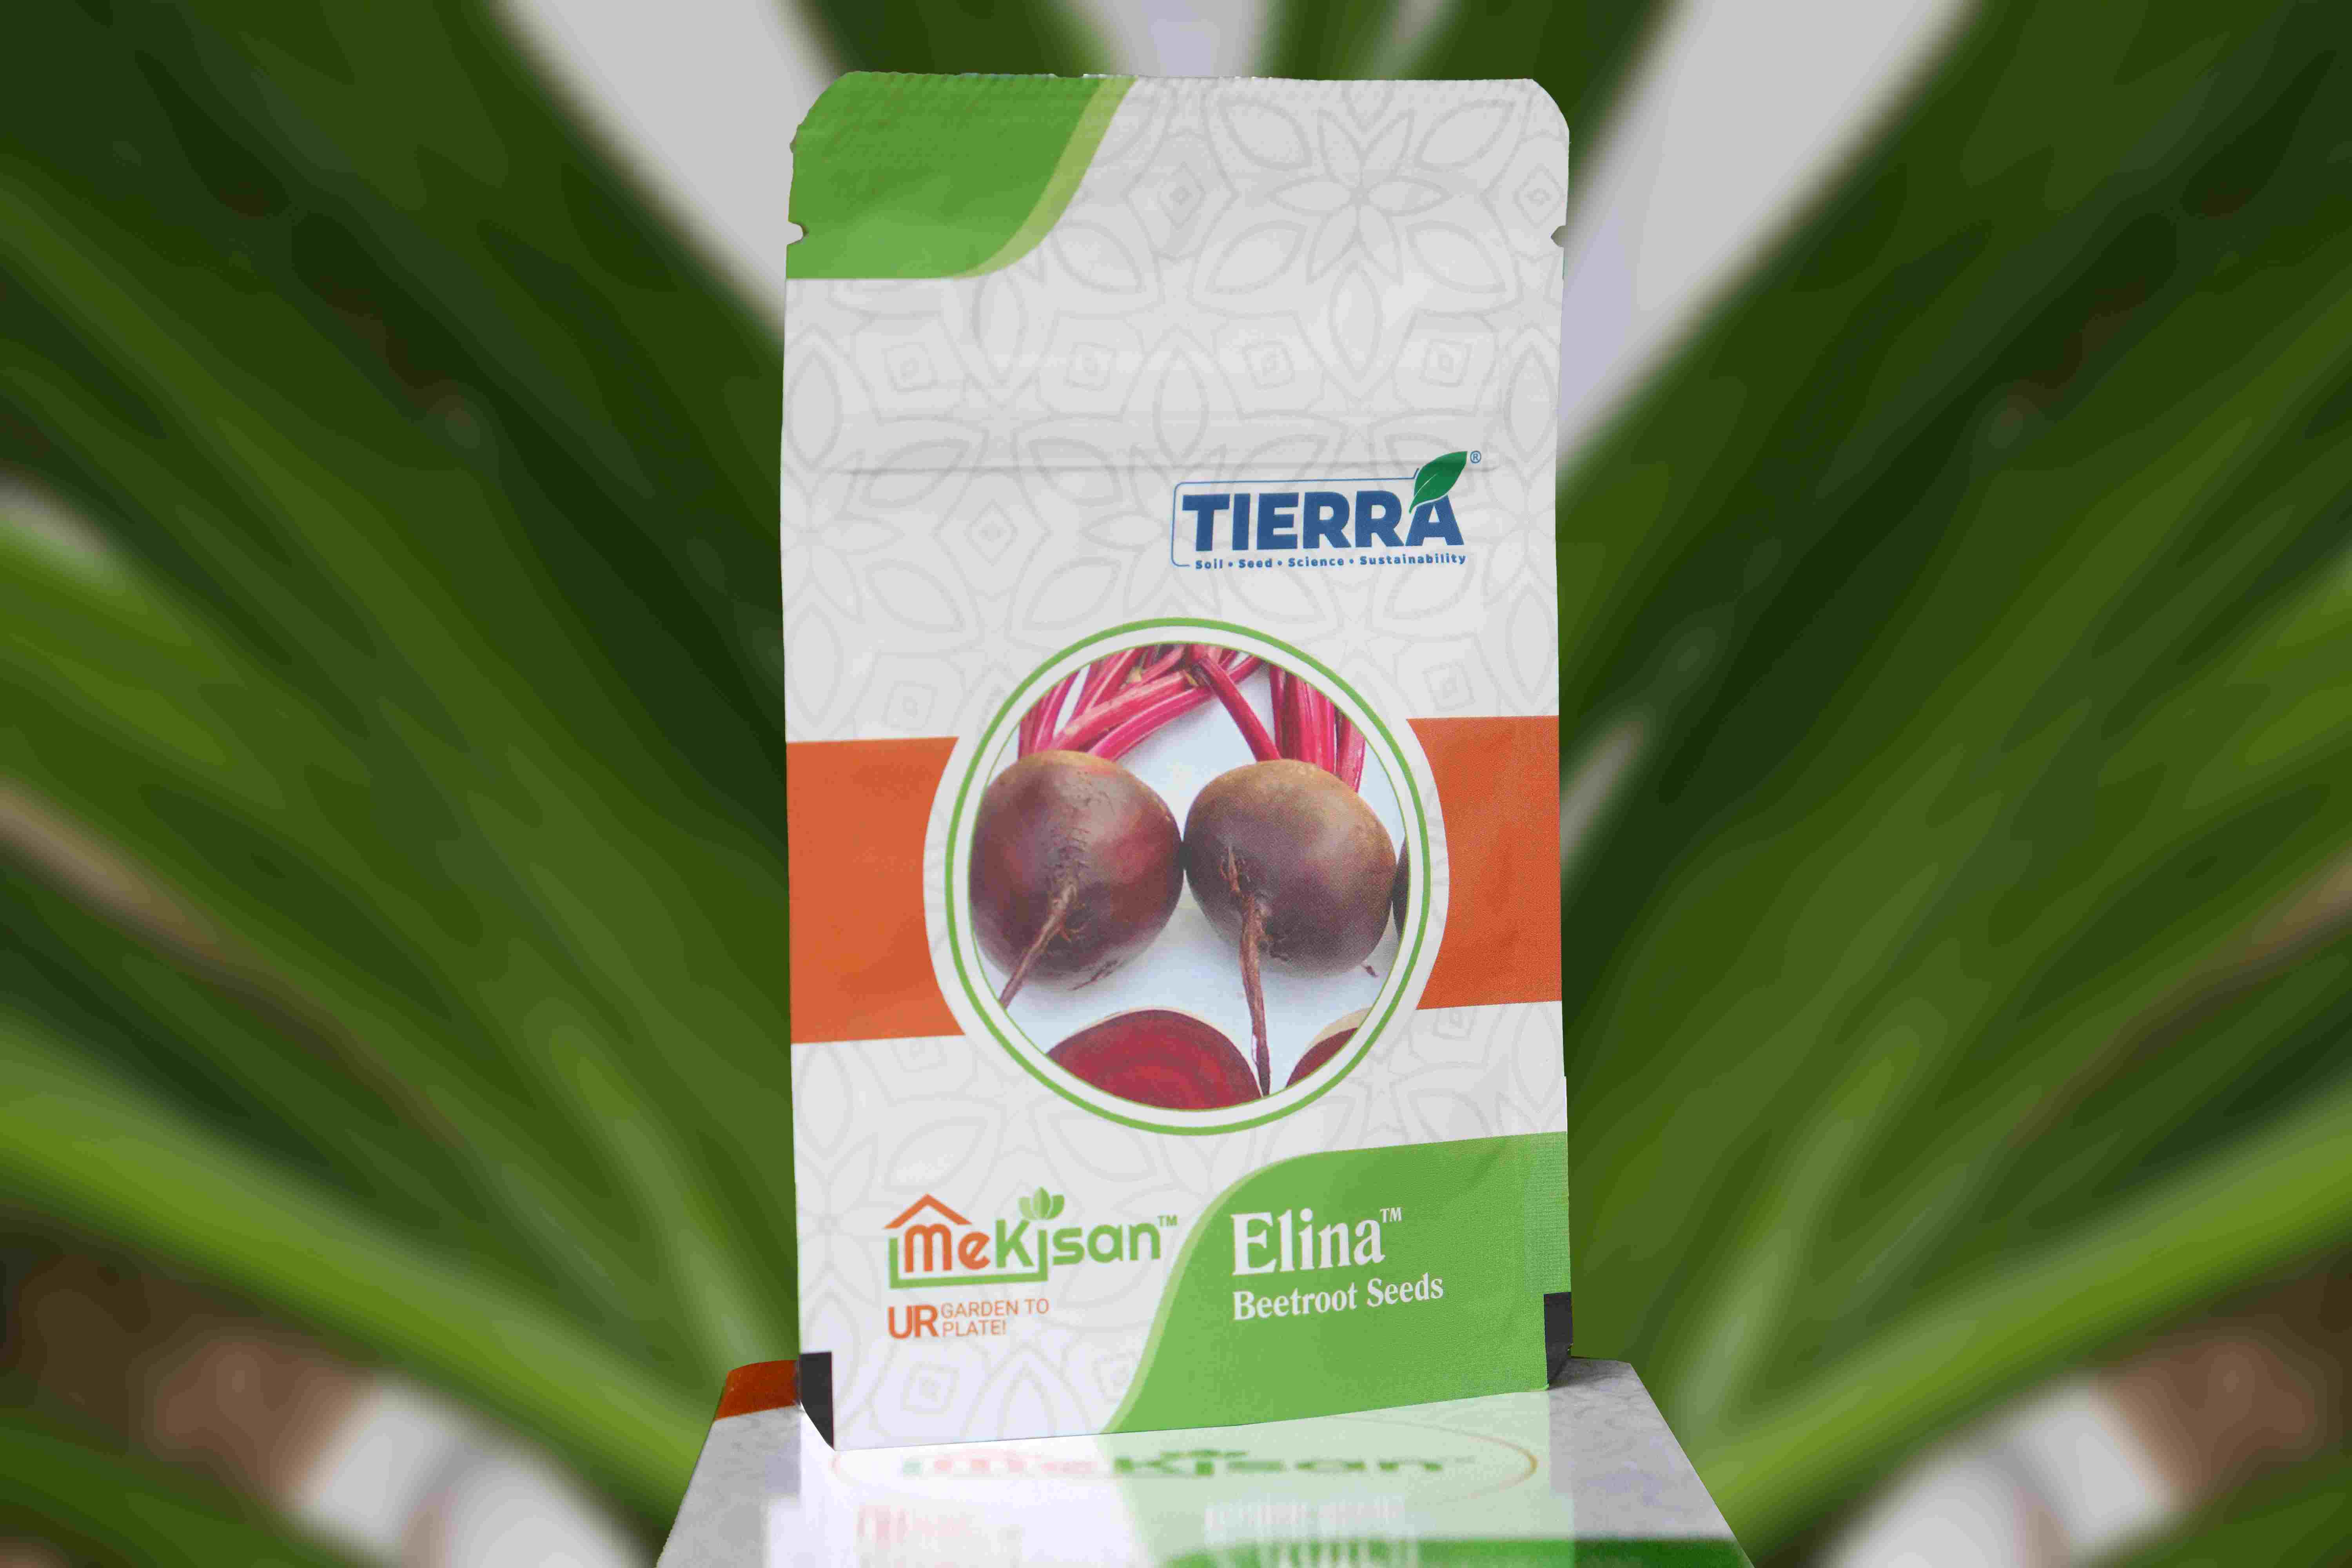 Elina-Beetroot Seeds